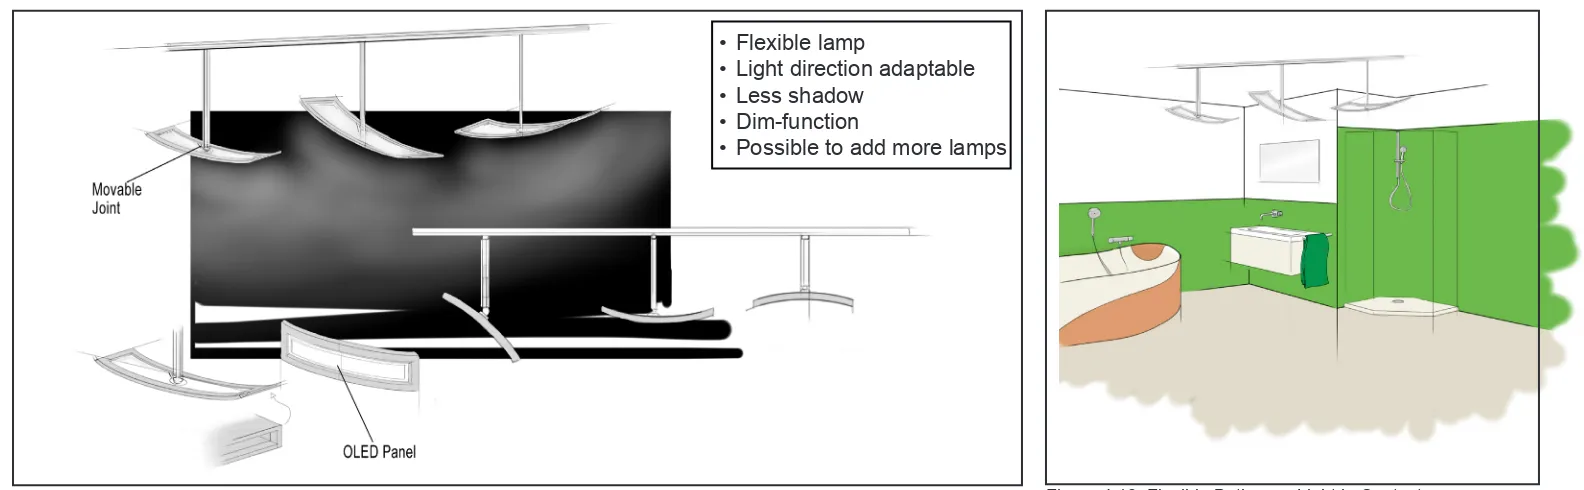 Figure 4.18. Flexible Bathroom Light in Context